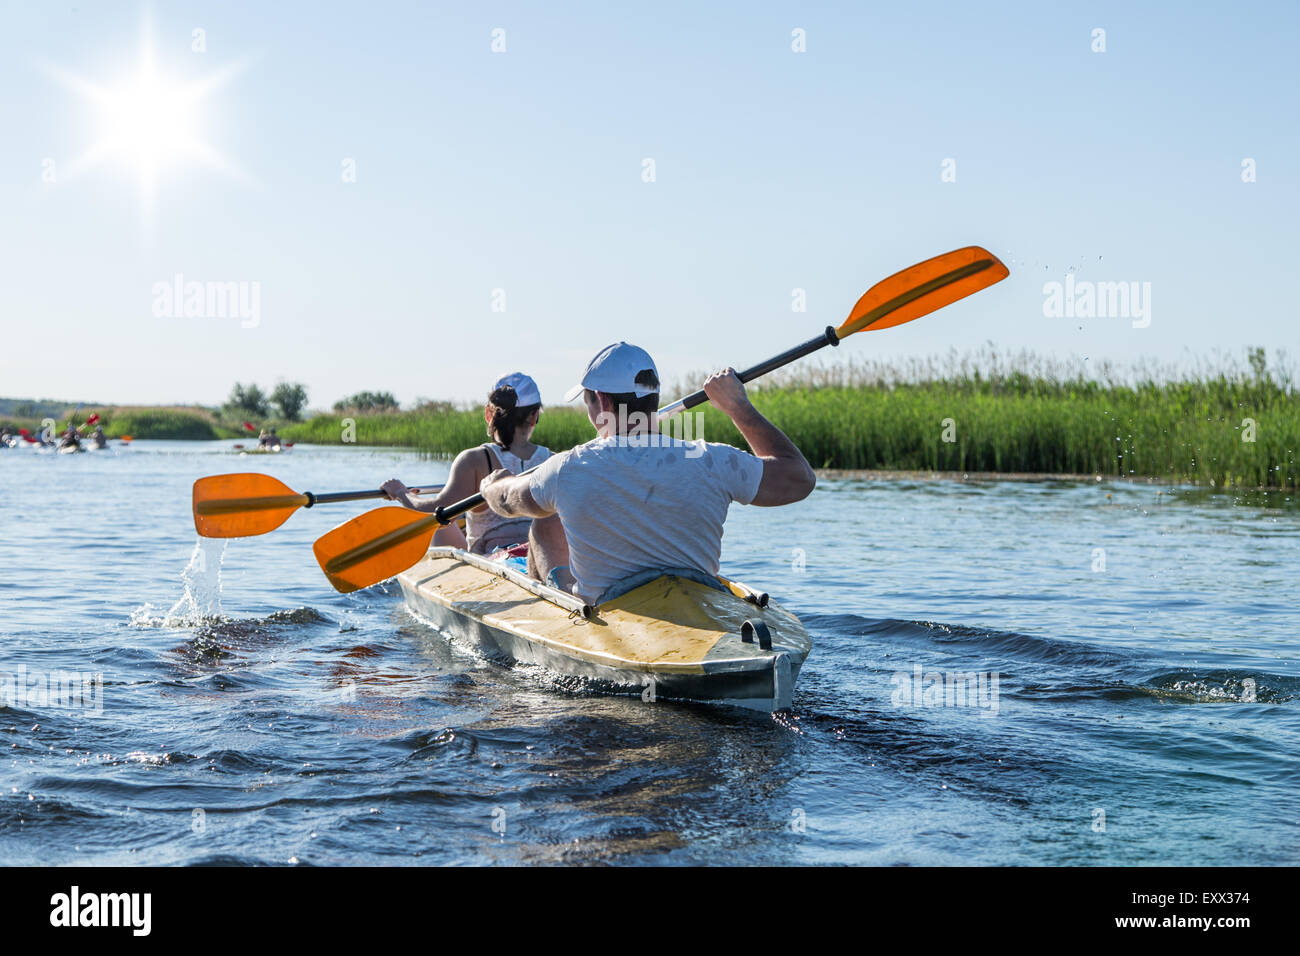 Rafting on the Vorskla River. Stock Photo